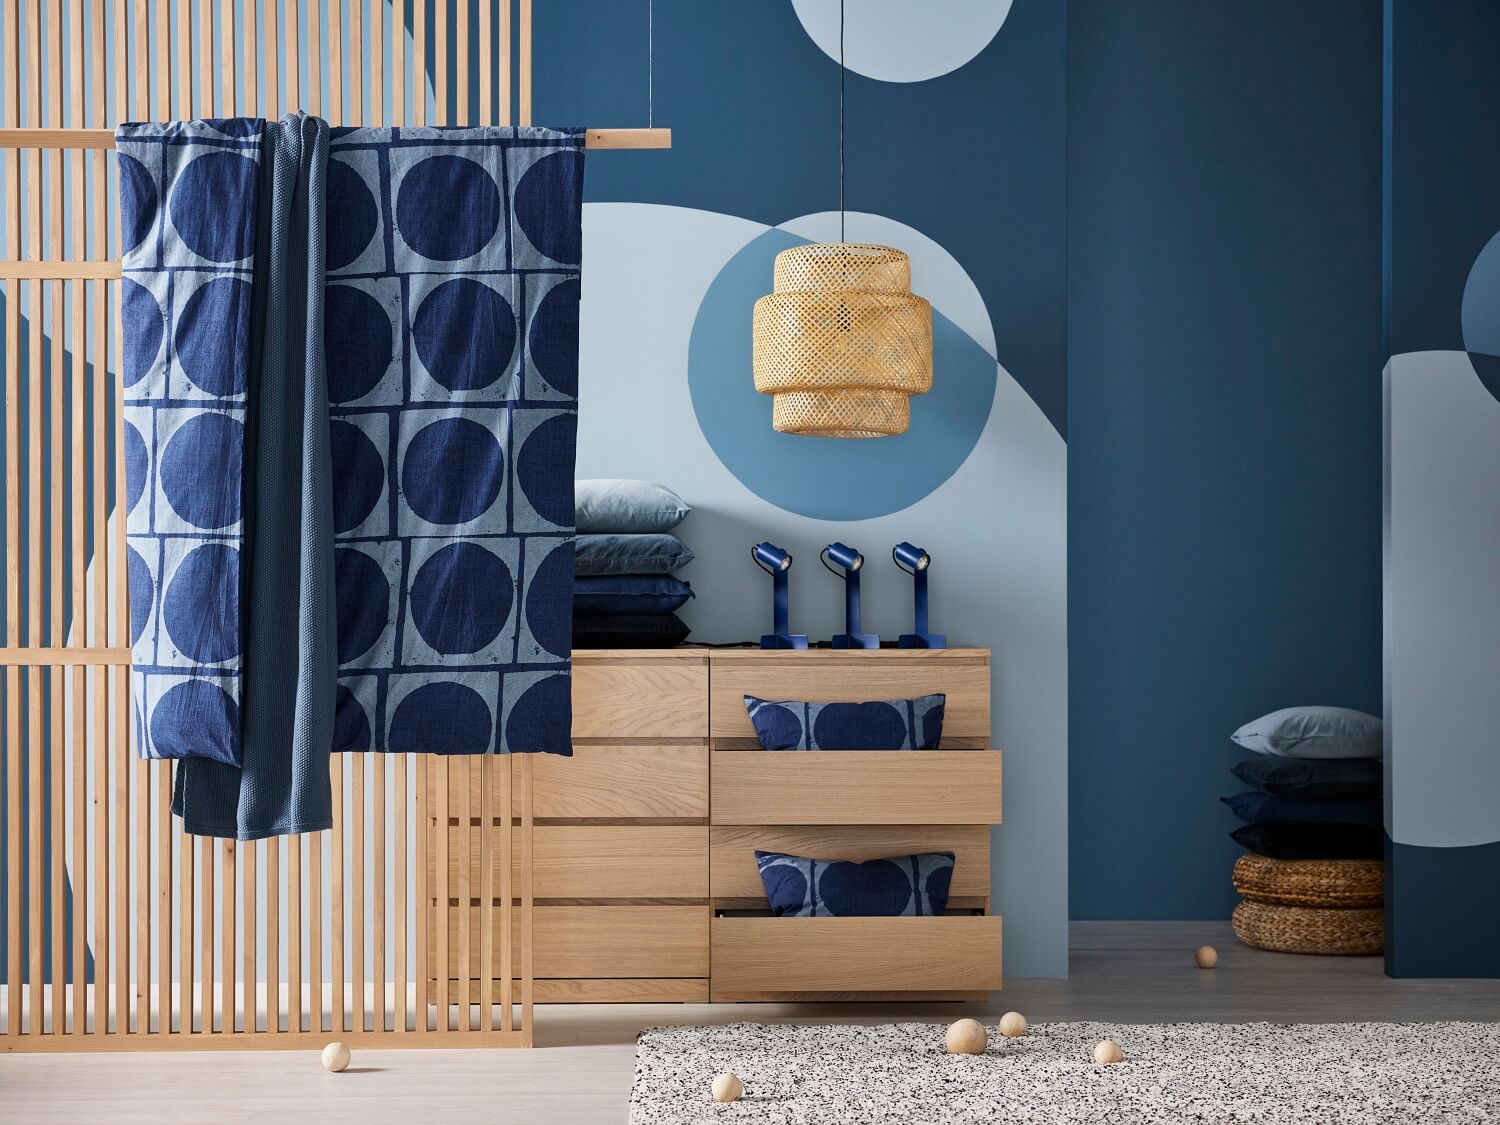 ikea-bedroom-decor-blue-duvet-nordroom